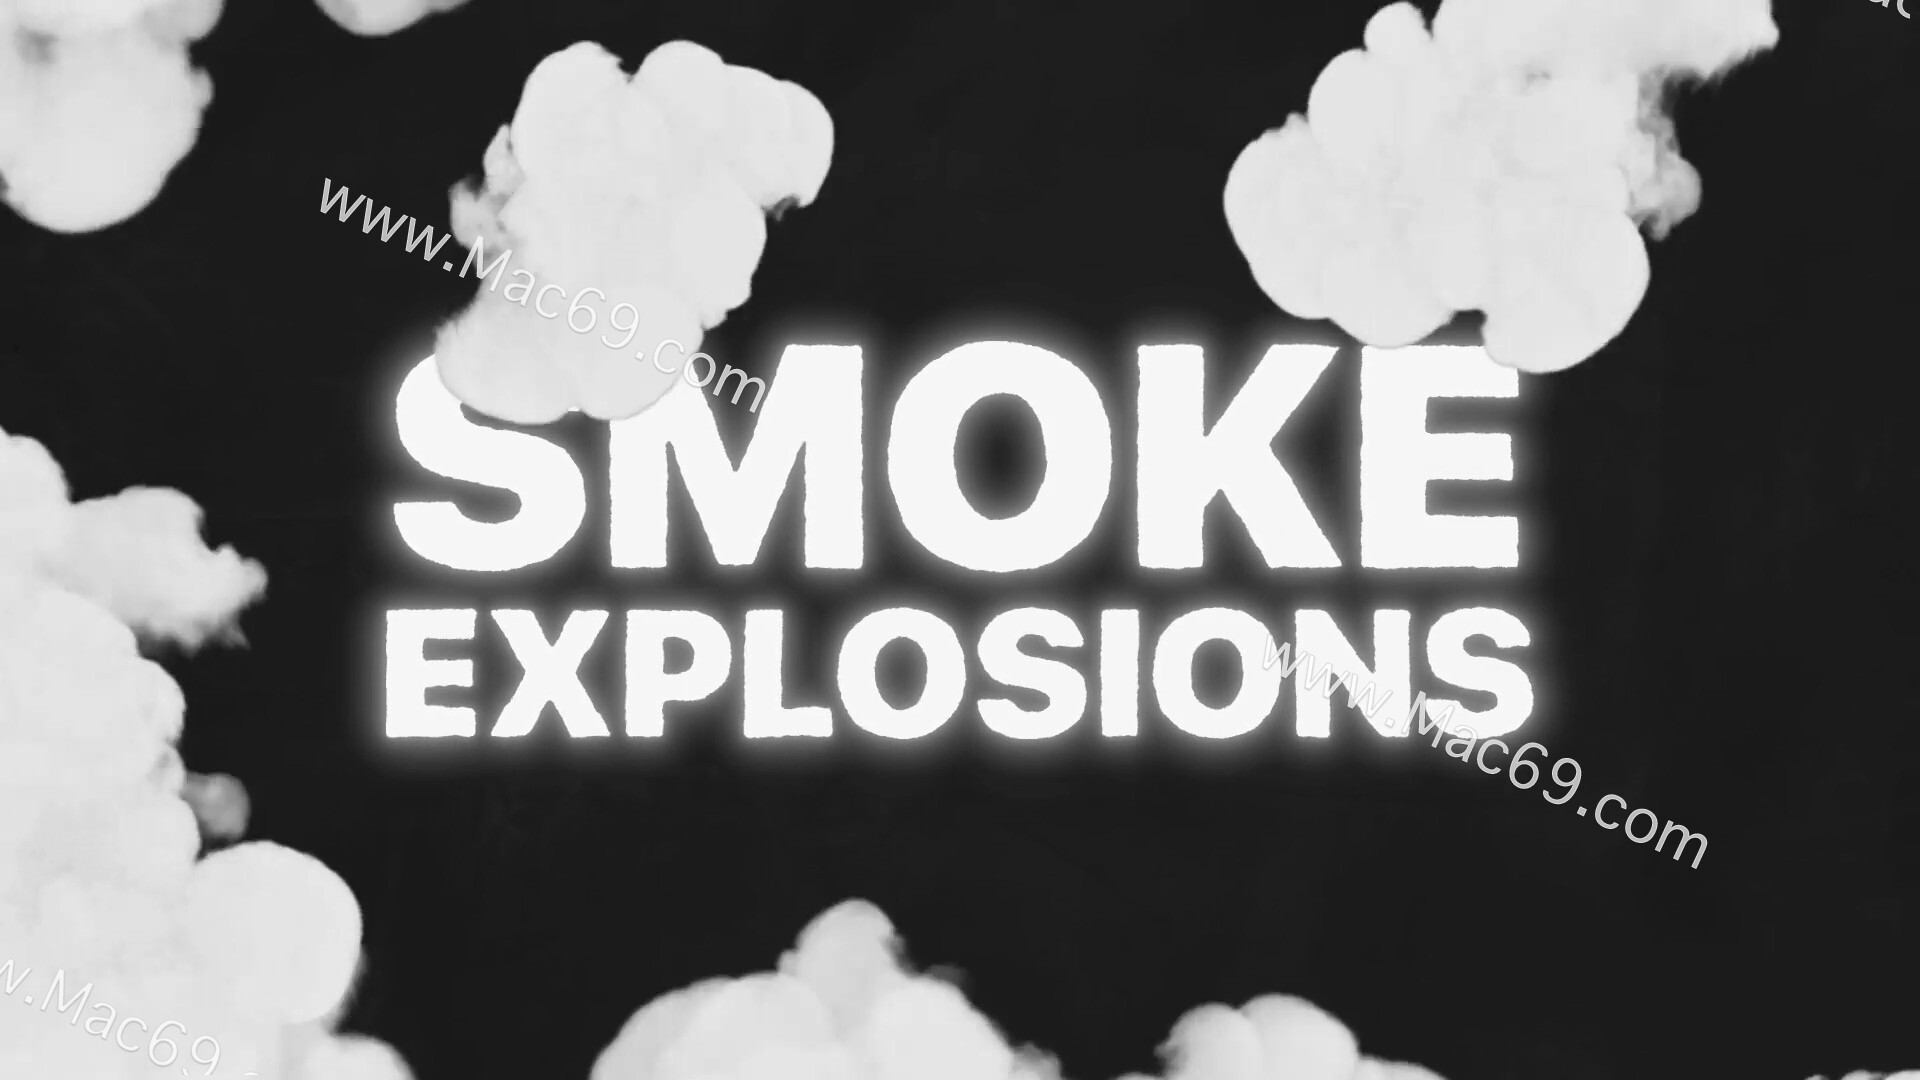 FCPX插件Smoke Explosions(烟雾爆炸动态效果) 